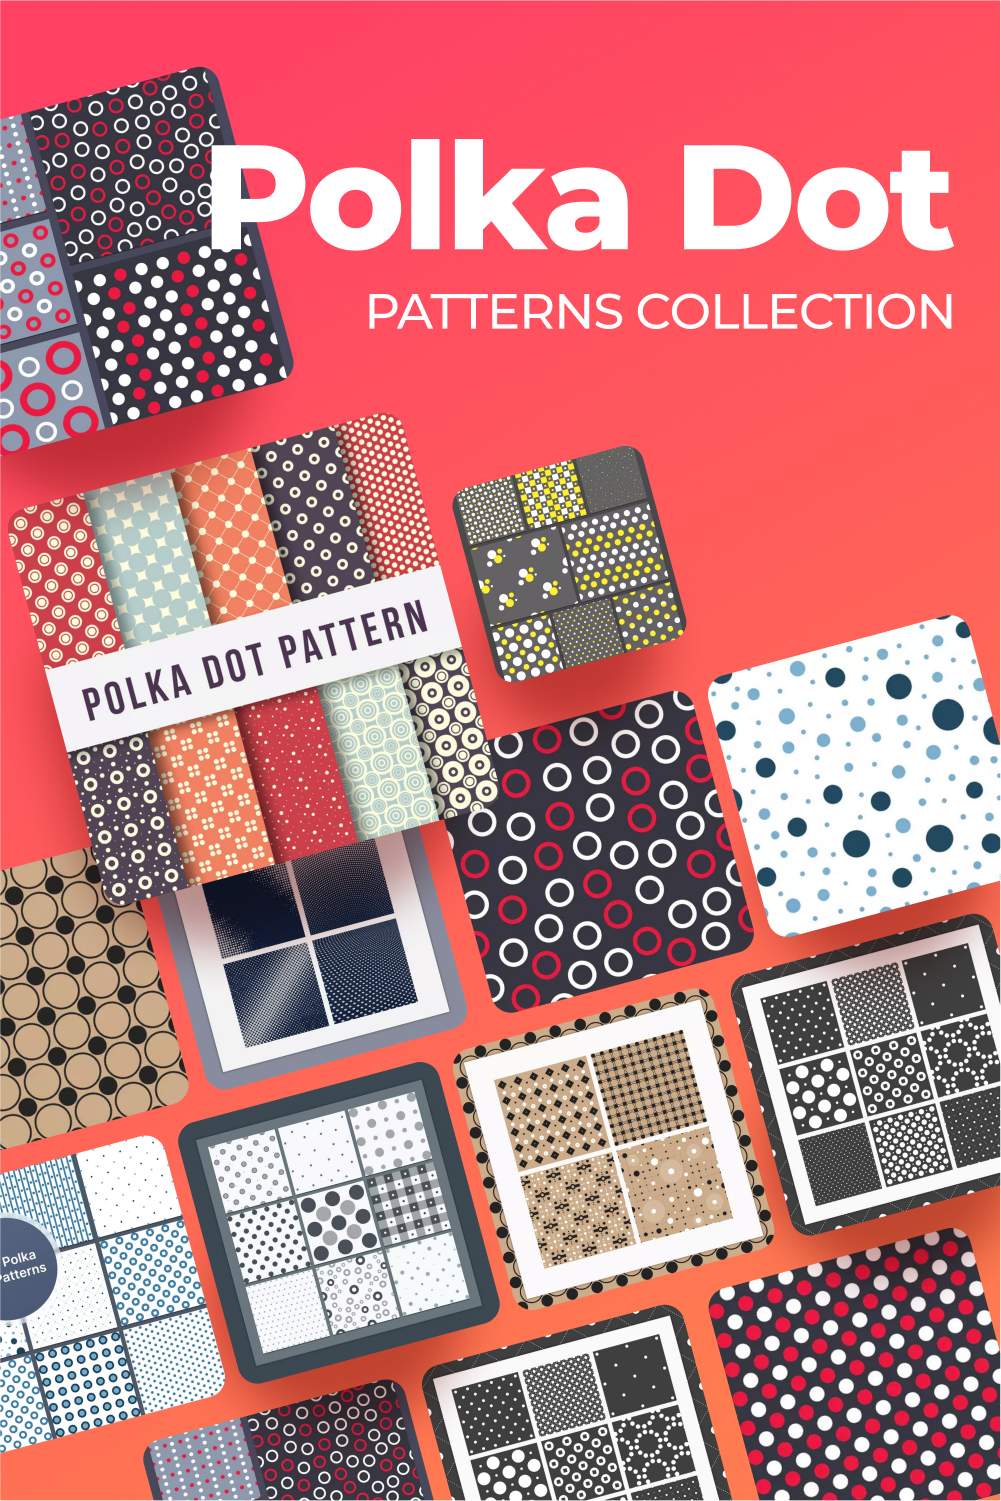 Polka Dot Patterns Collection Pinterest.